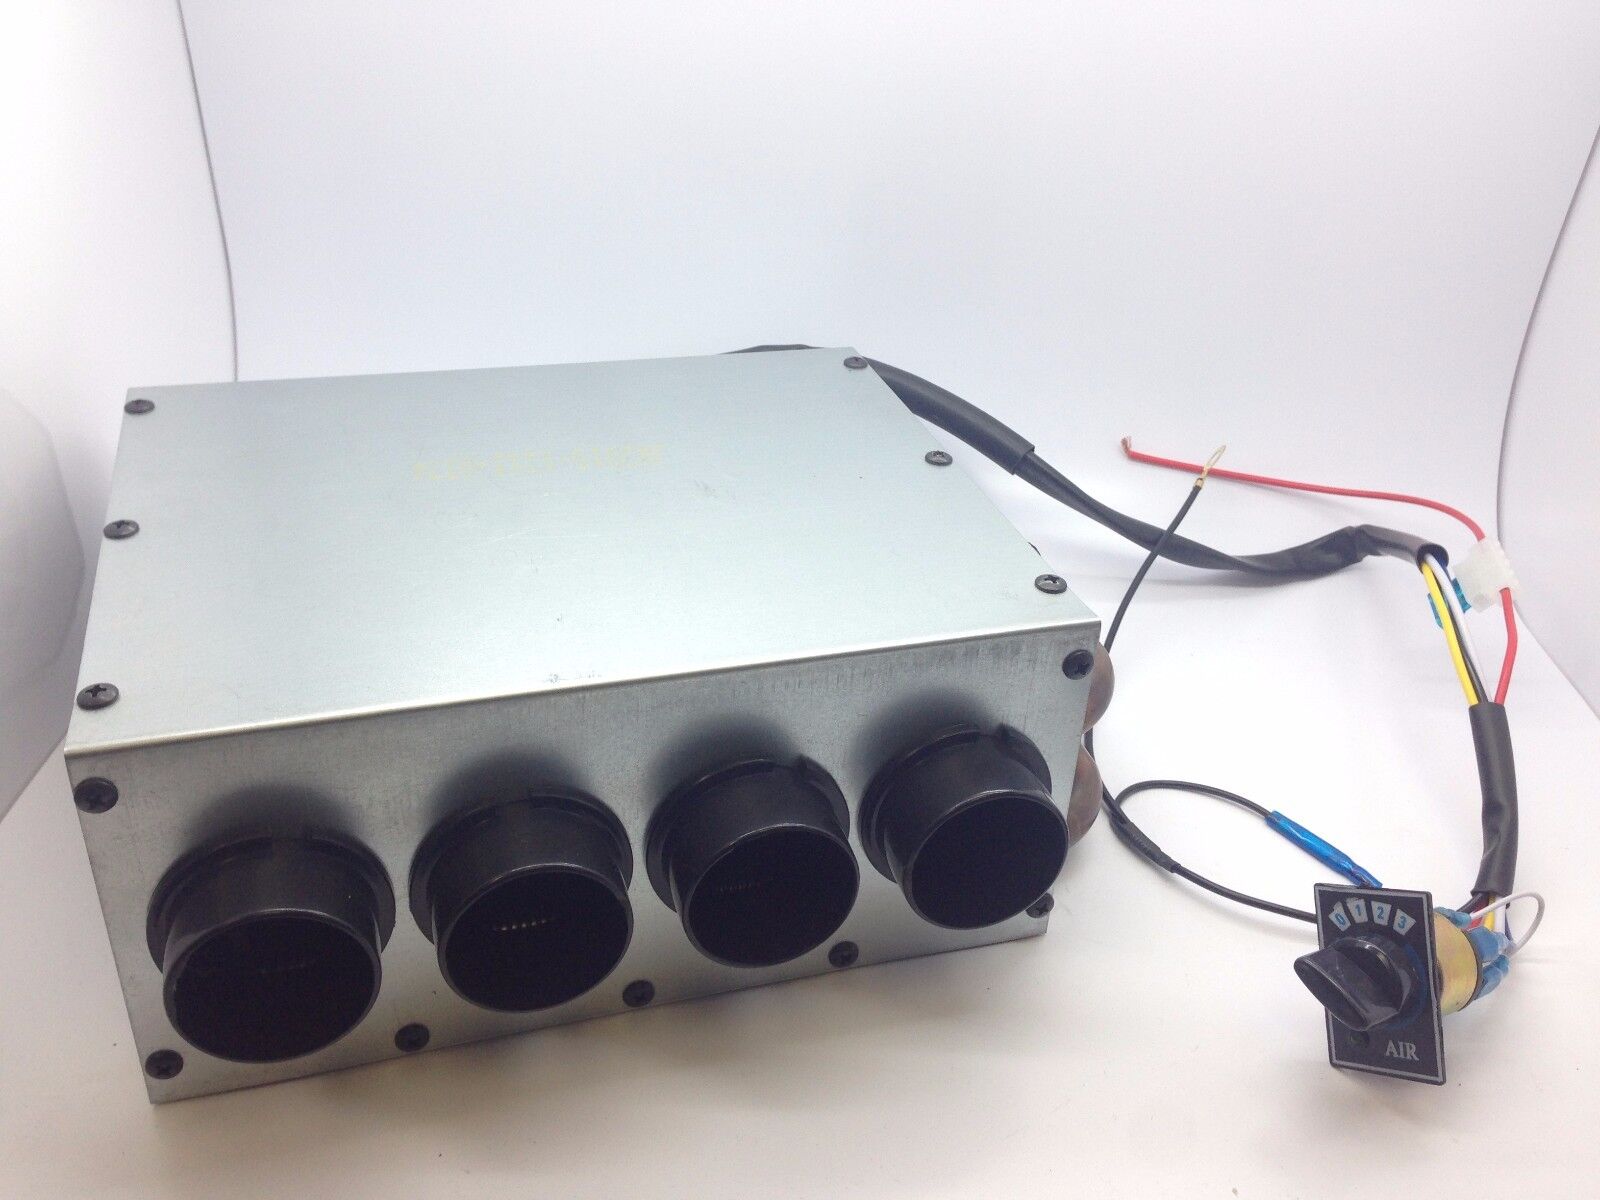 Universal Underdash Heater 12V Heat w/ 3-Speed Switch for Car or Truck - 4 port